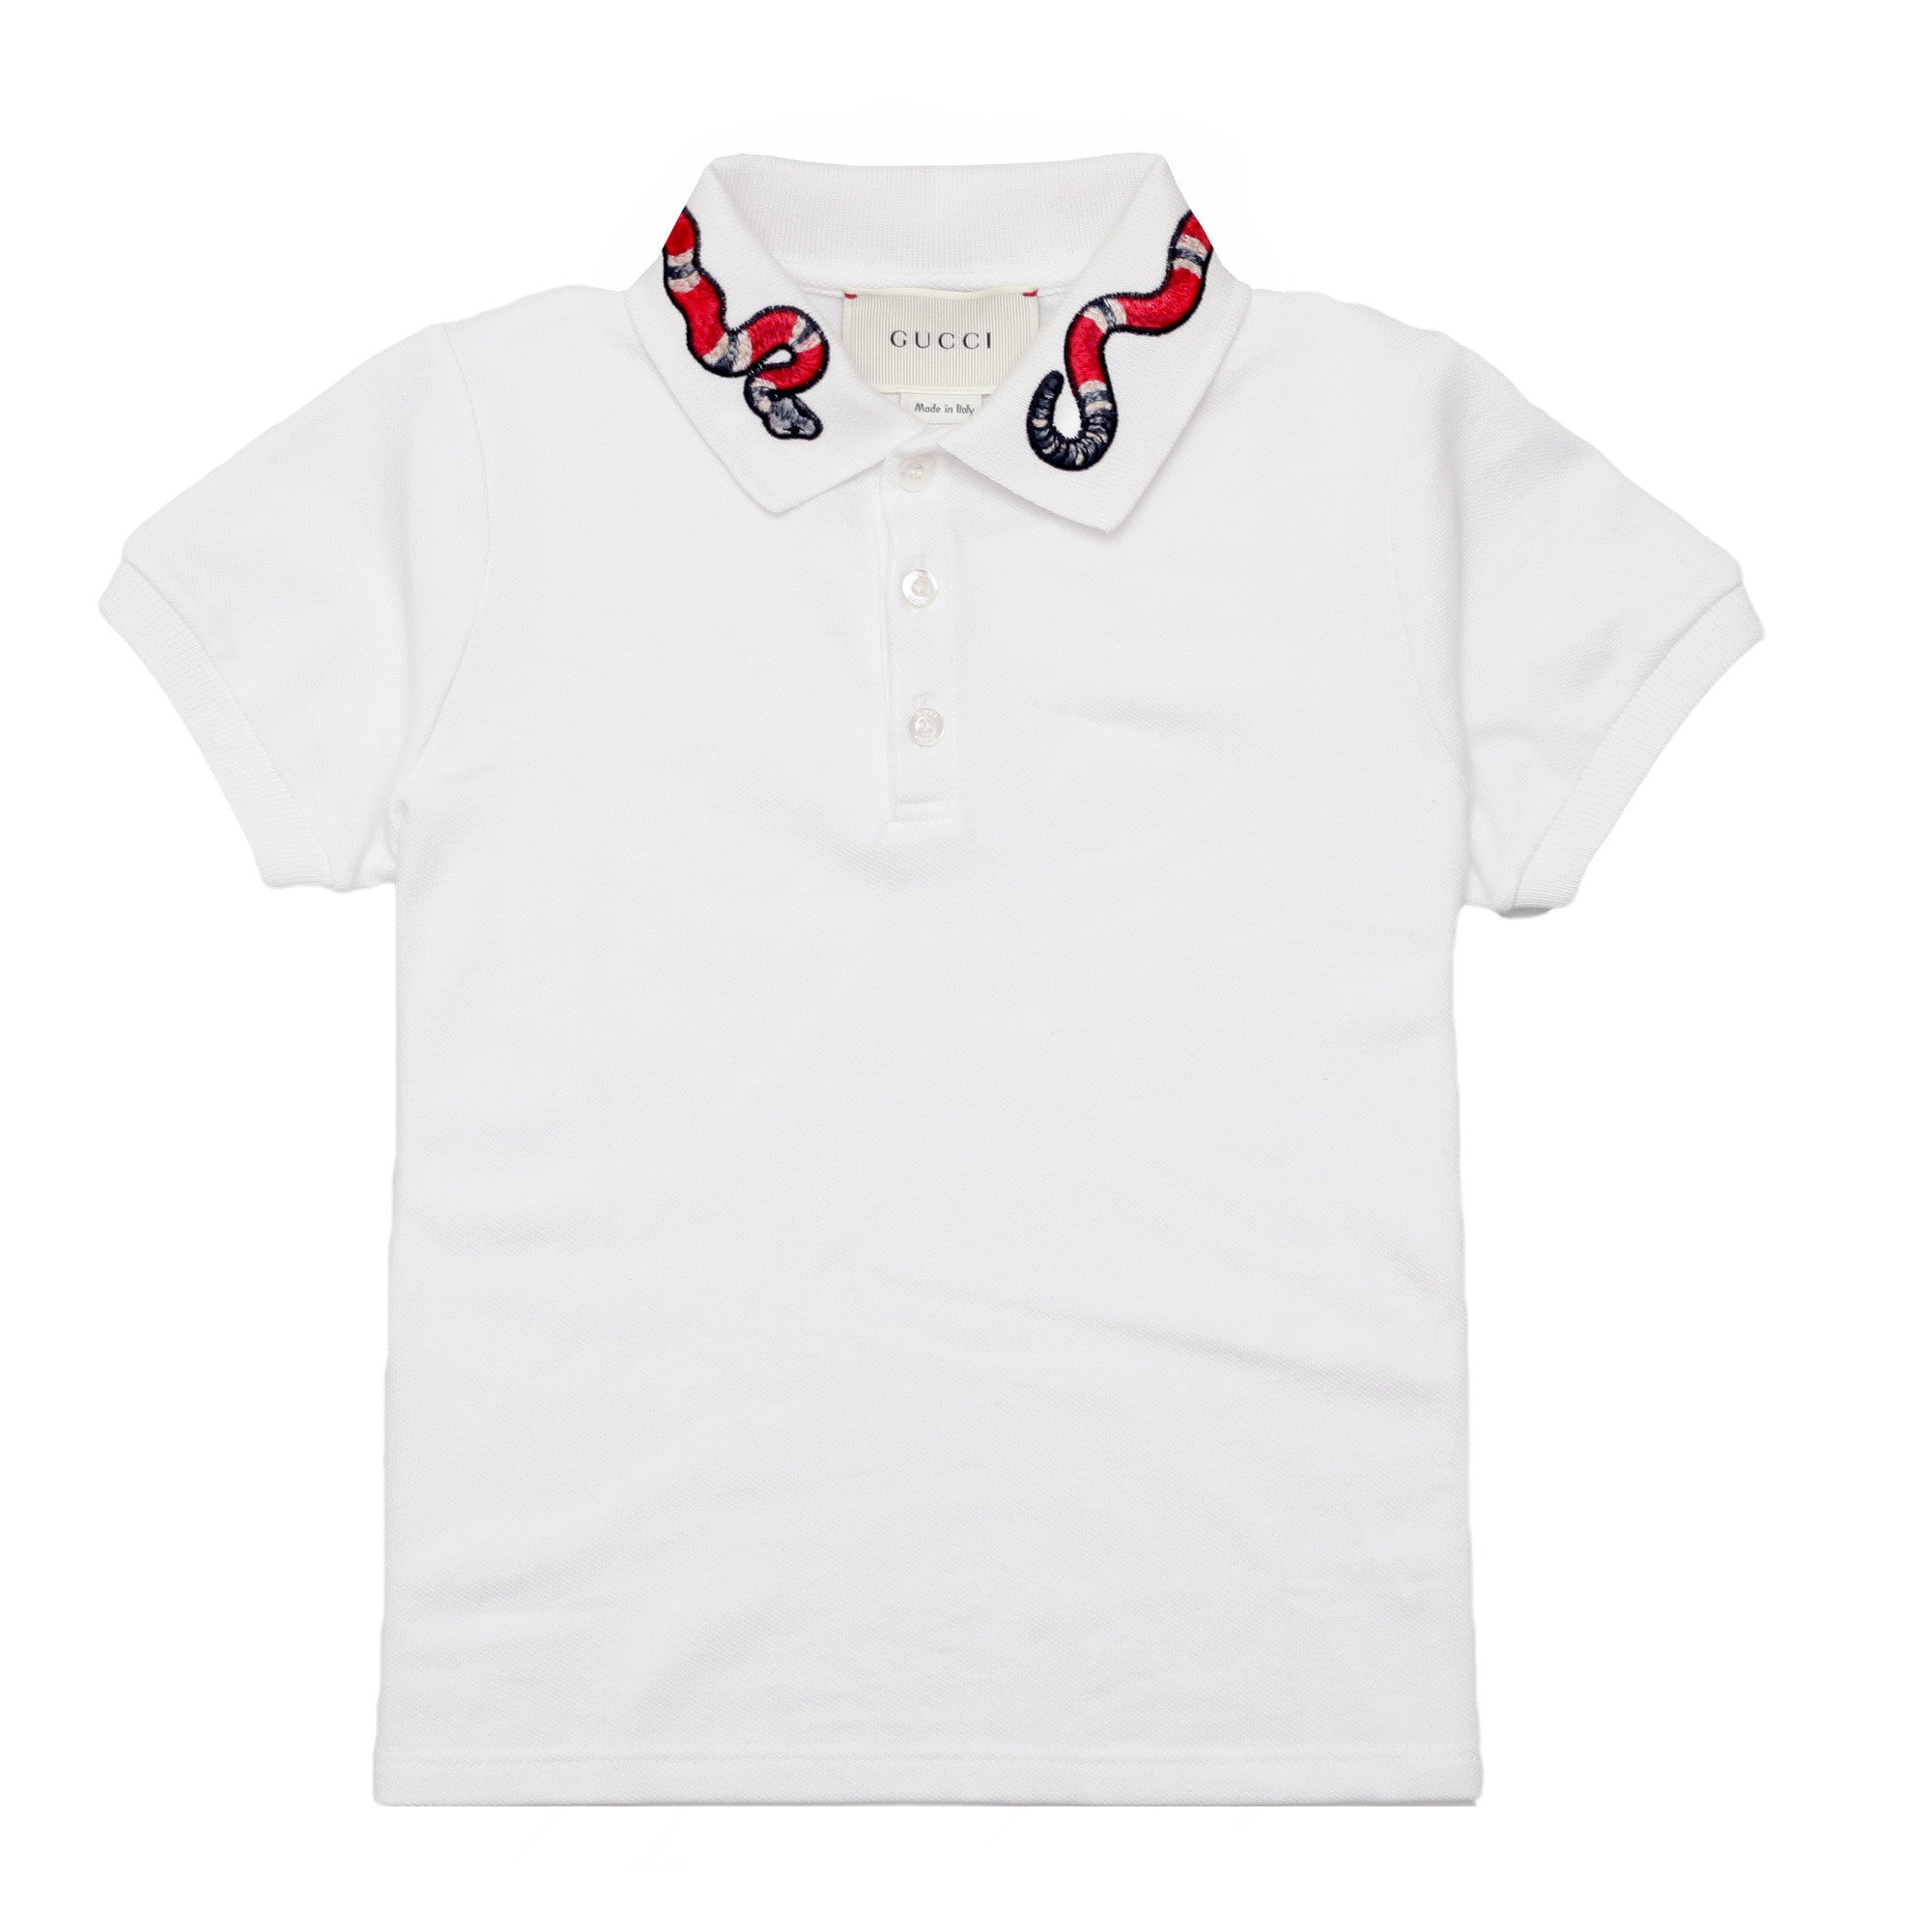 Boys White Embroidered Snake Cuffs Polo Shirt - CÉMAROSE | Children's Fashion Store - 1